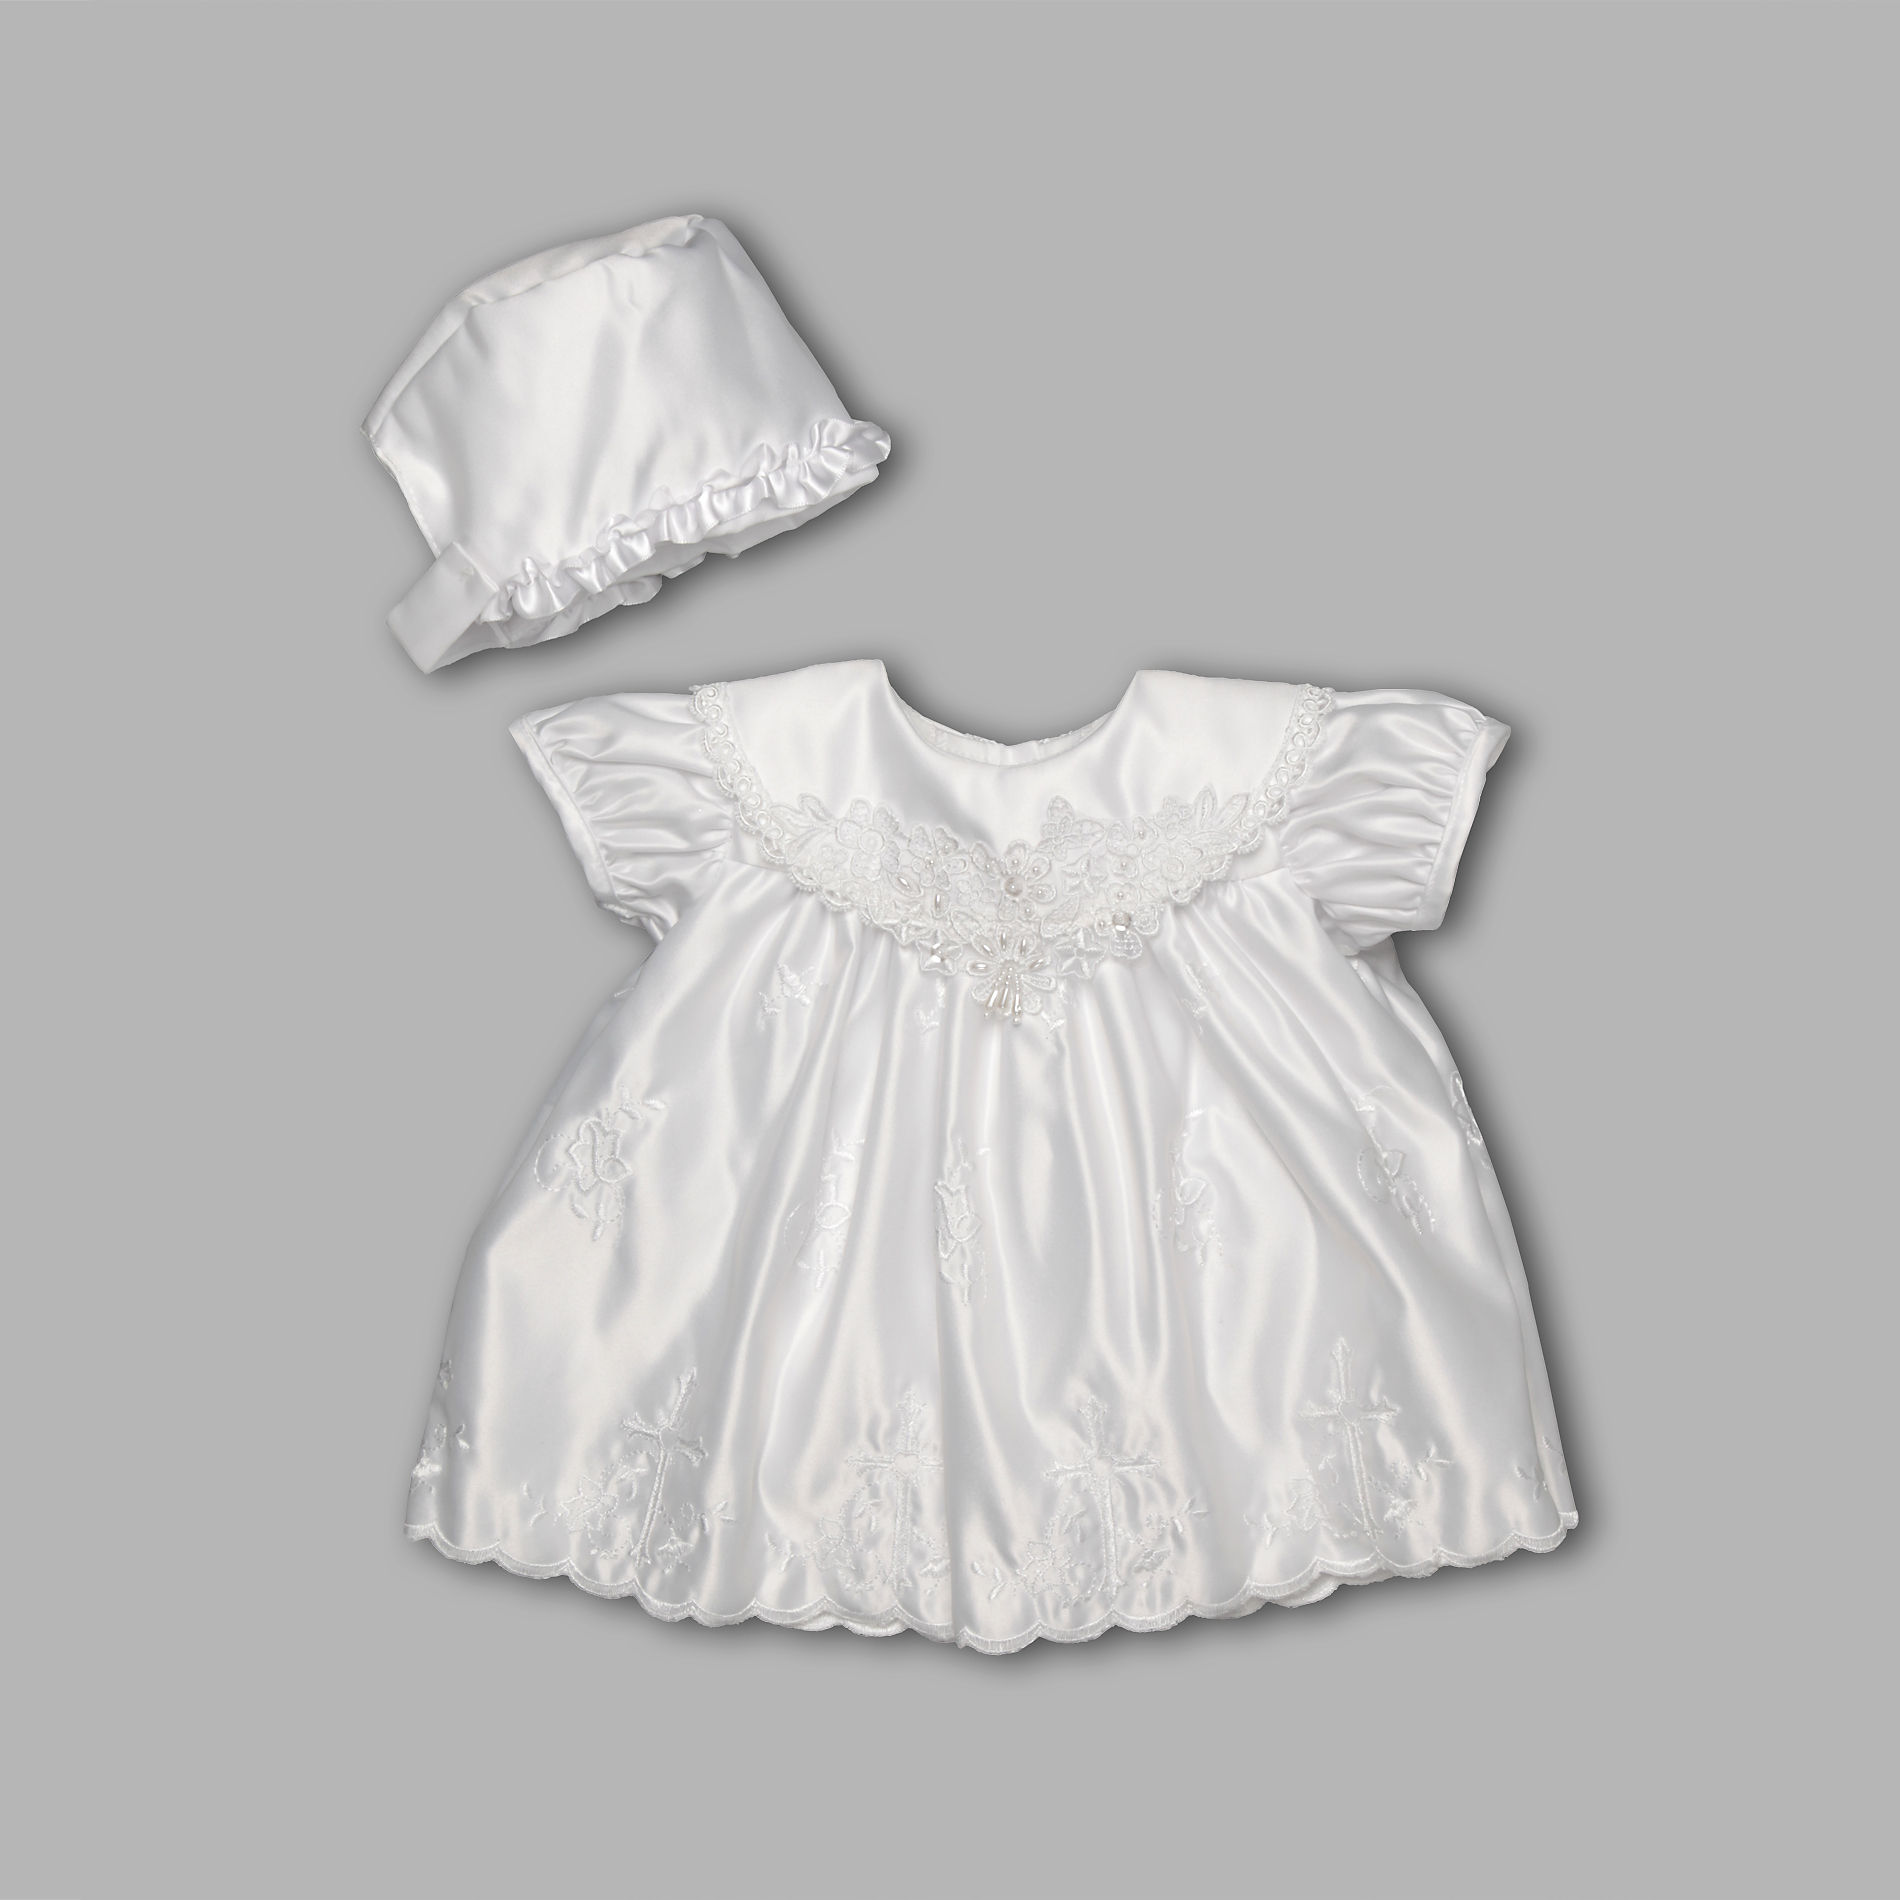 MaDonna Newborn Girl's Short Embroidered Satin Christening Dress with Hat